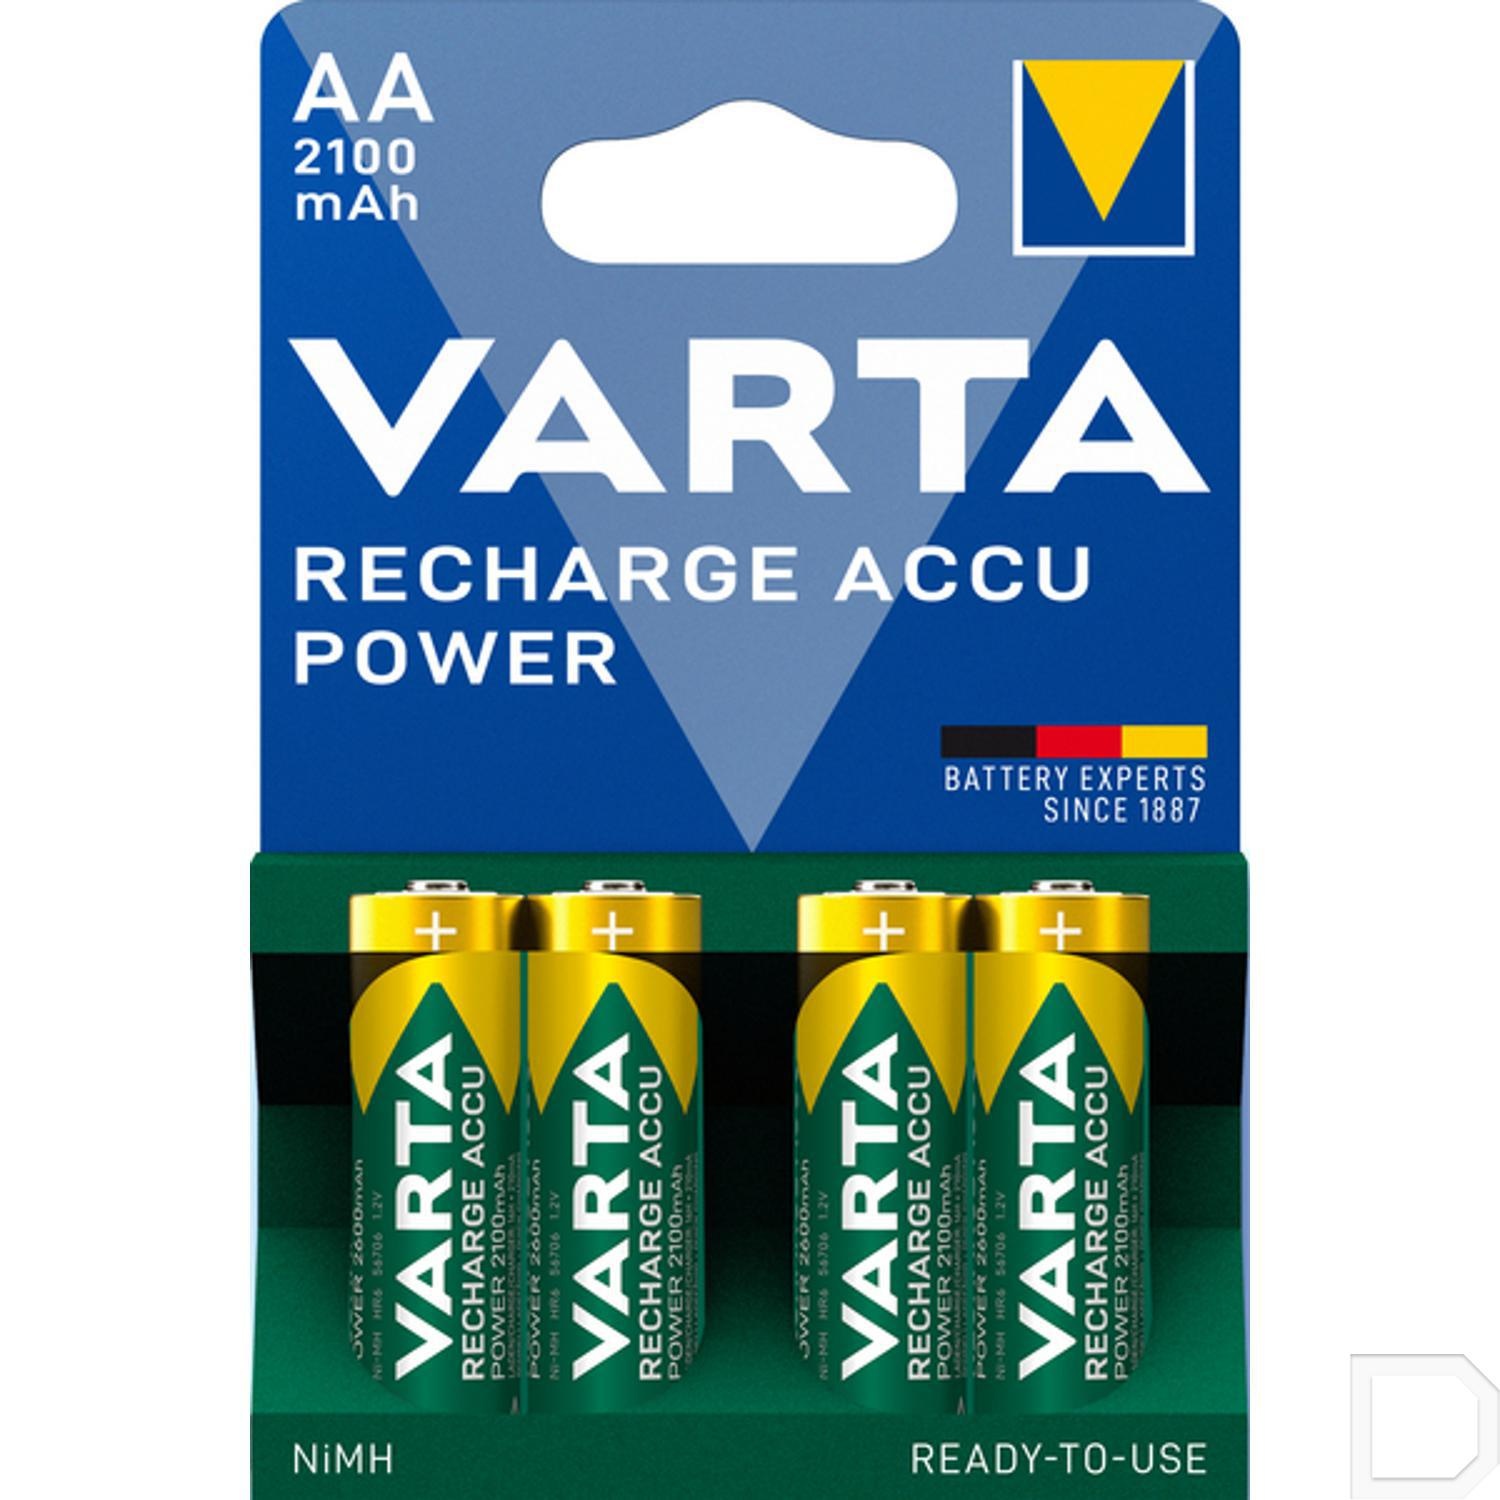 beet slaap zuurgraad Varta AA oplaadbare batterijen 2 stuks - 2100mAh - Beterbatterij